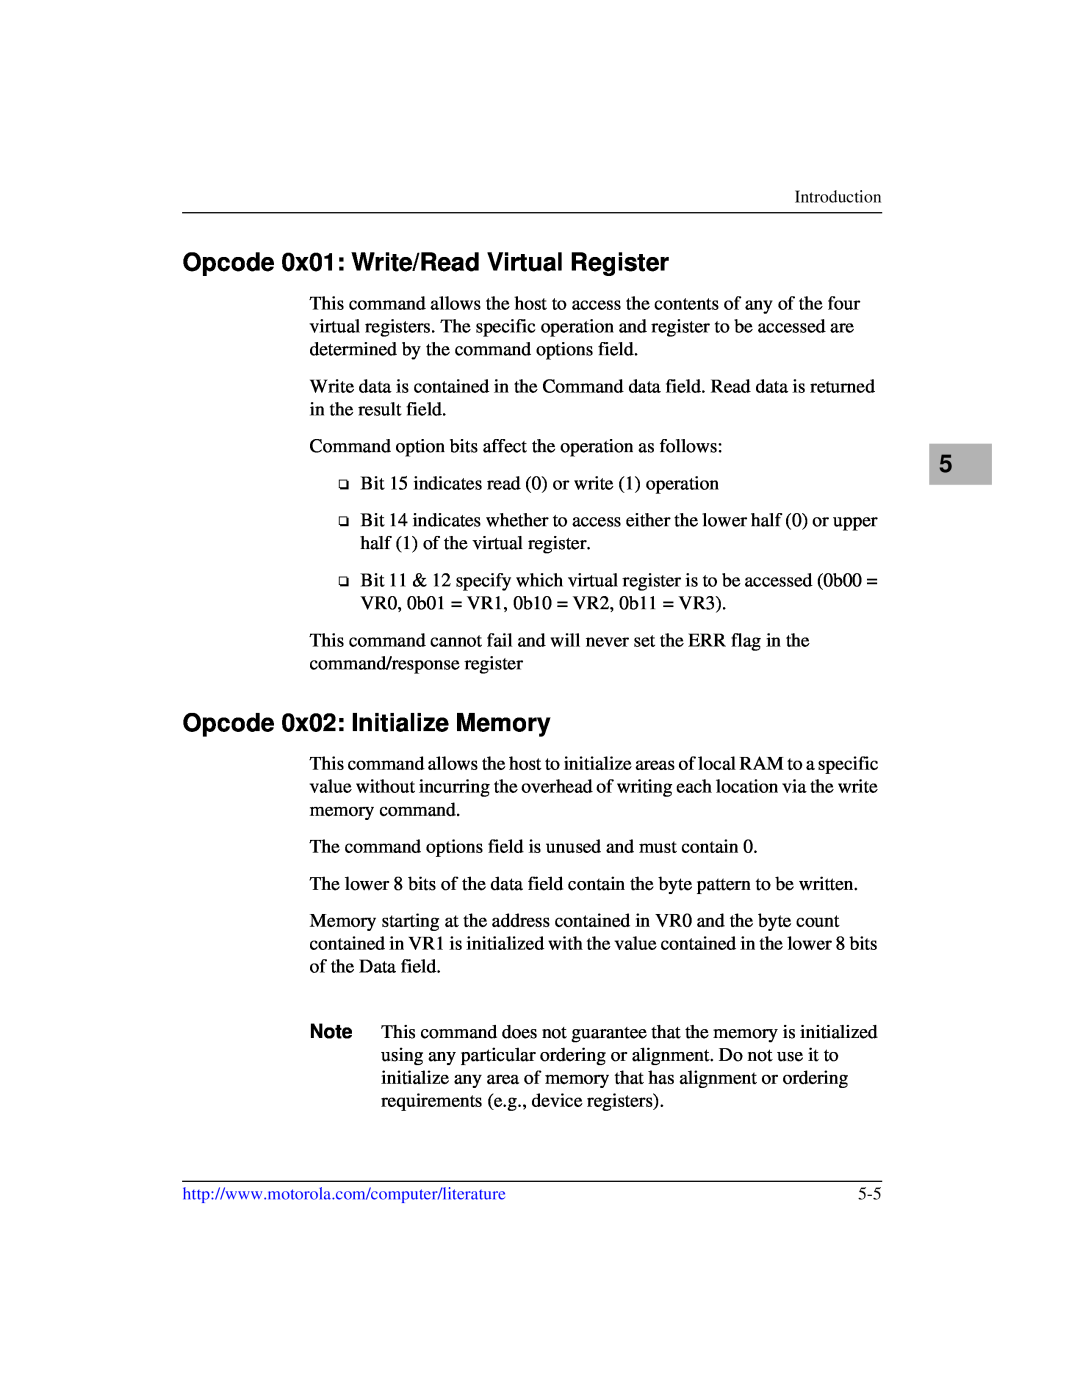 Motorola IH5, MCPN750A manual Opcode 0x01 Write/Read Virtual Register, Opcode 0x02 Initialize Memory 